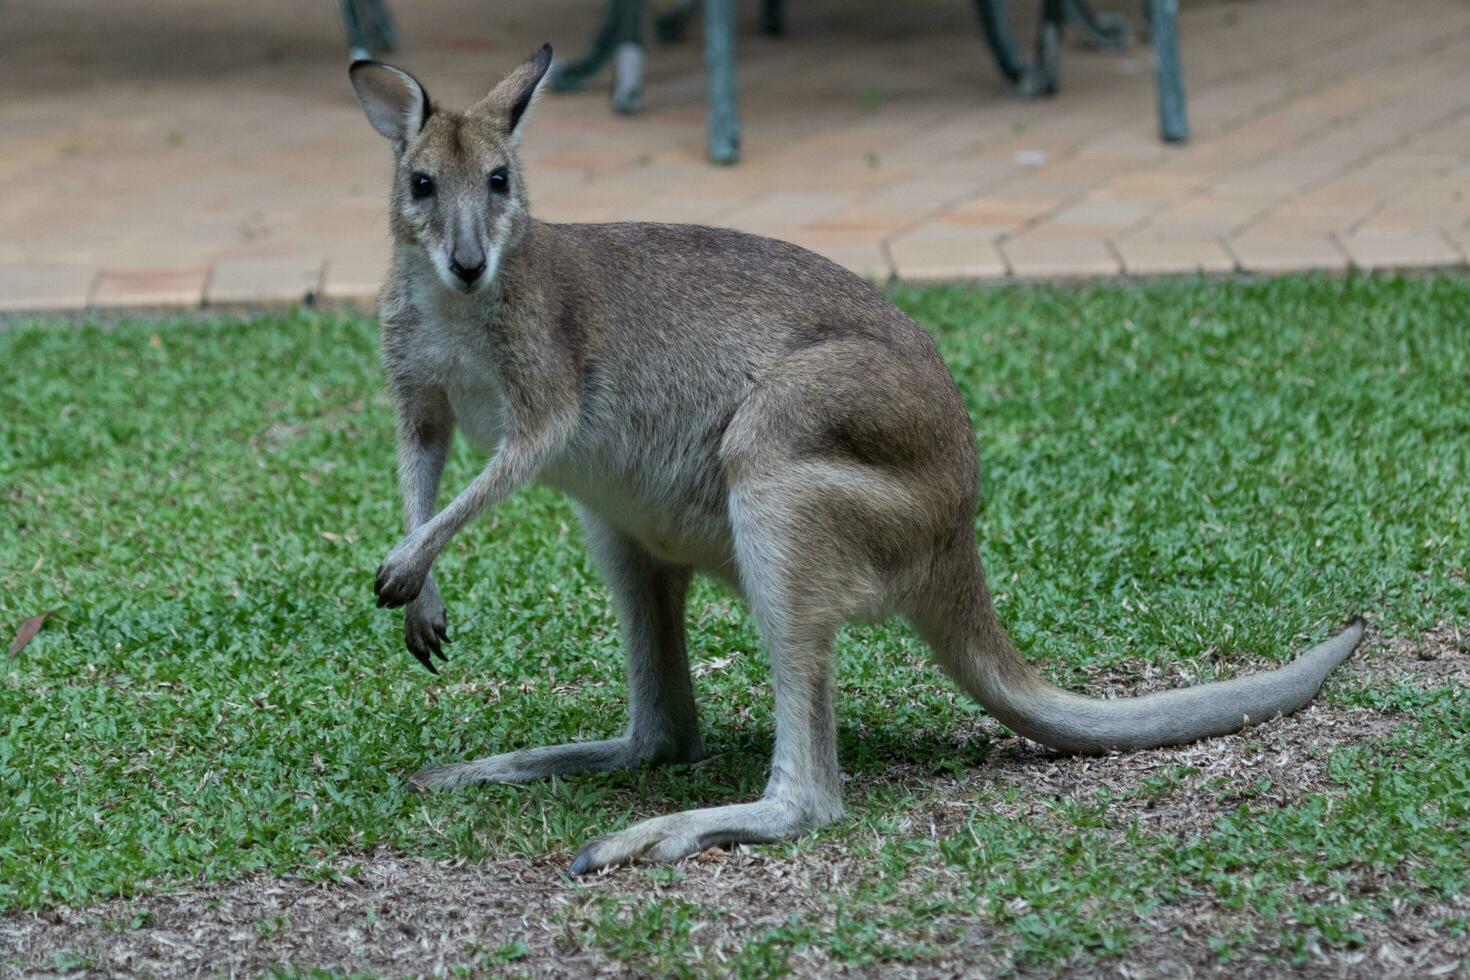 Agile Wallaby in Australia photo